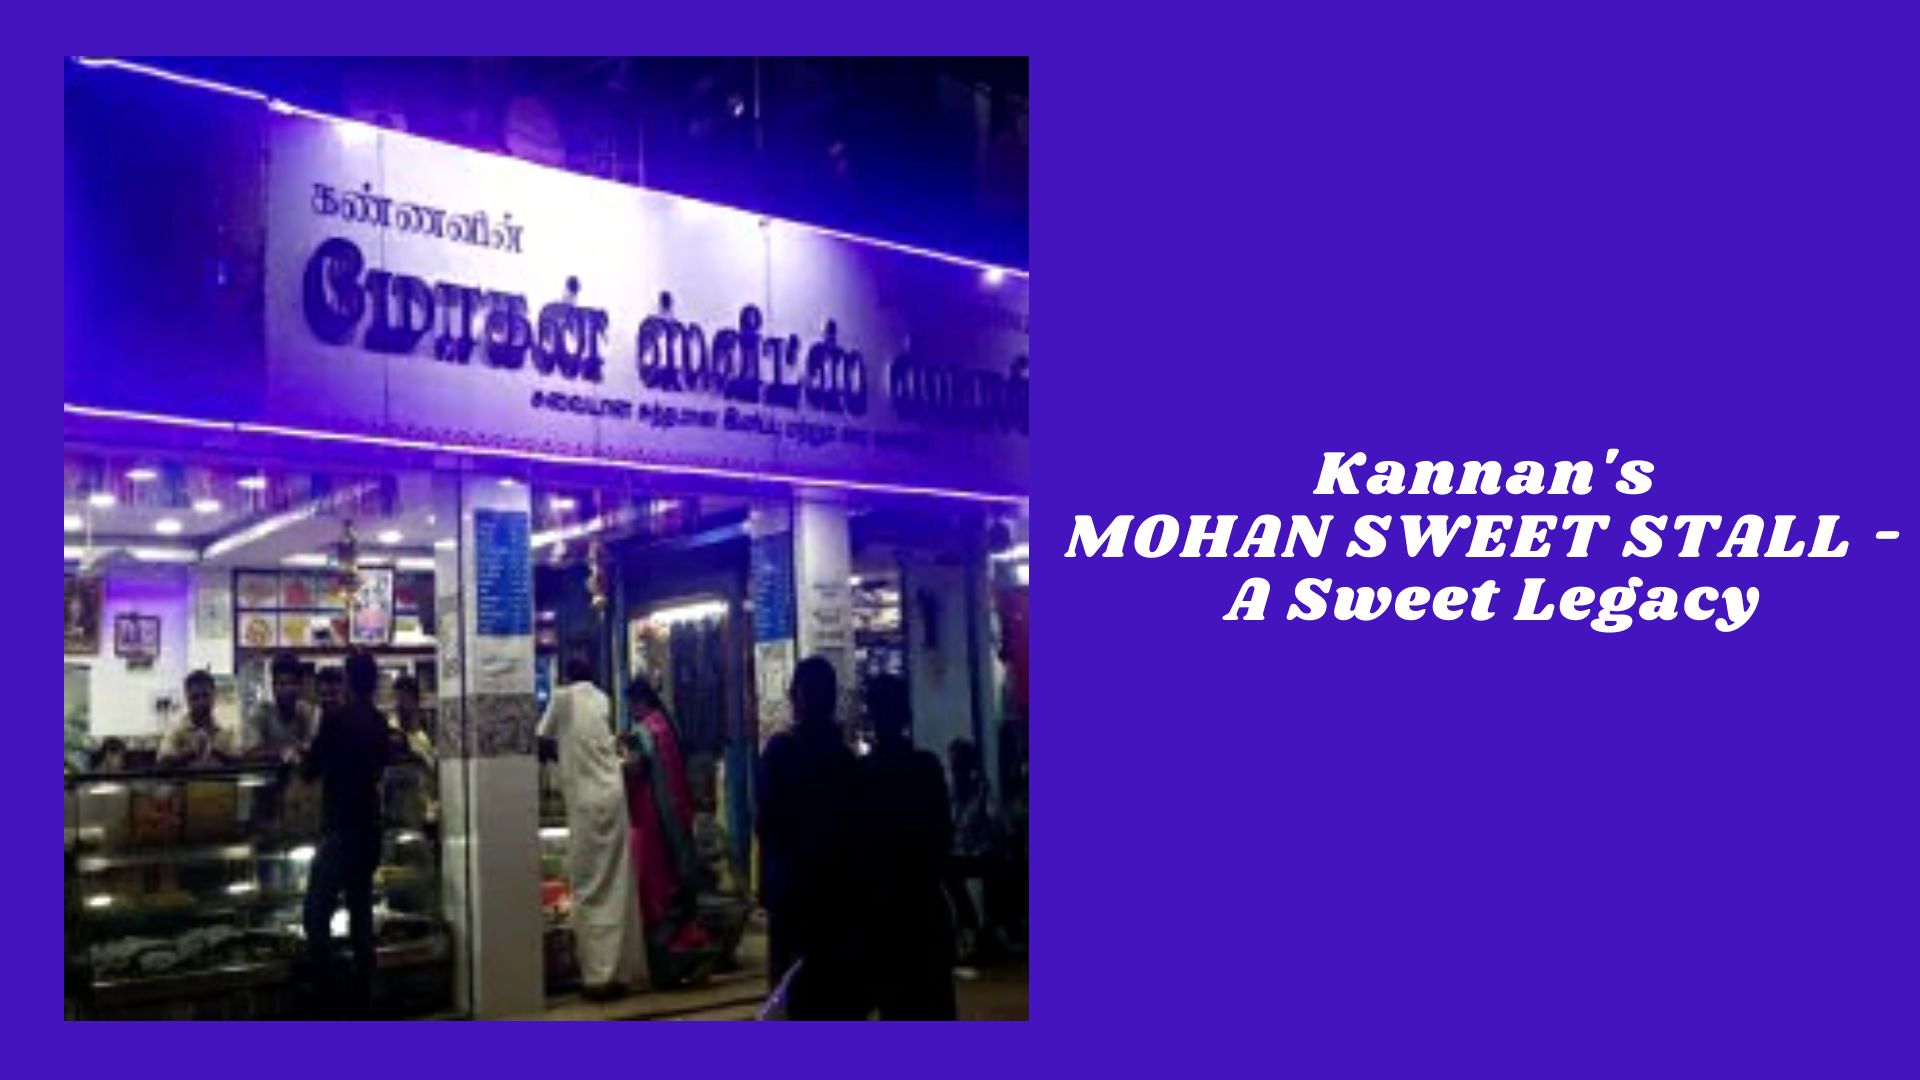 Kannan's MOHAN SWEET STALL - A Sweet Legacy